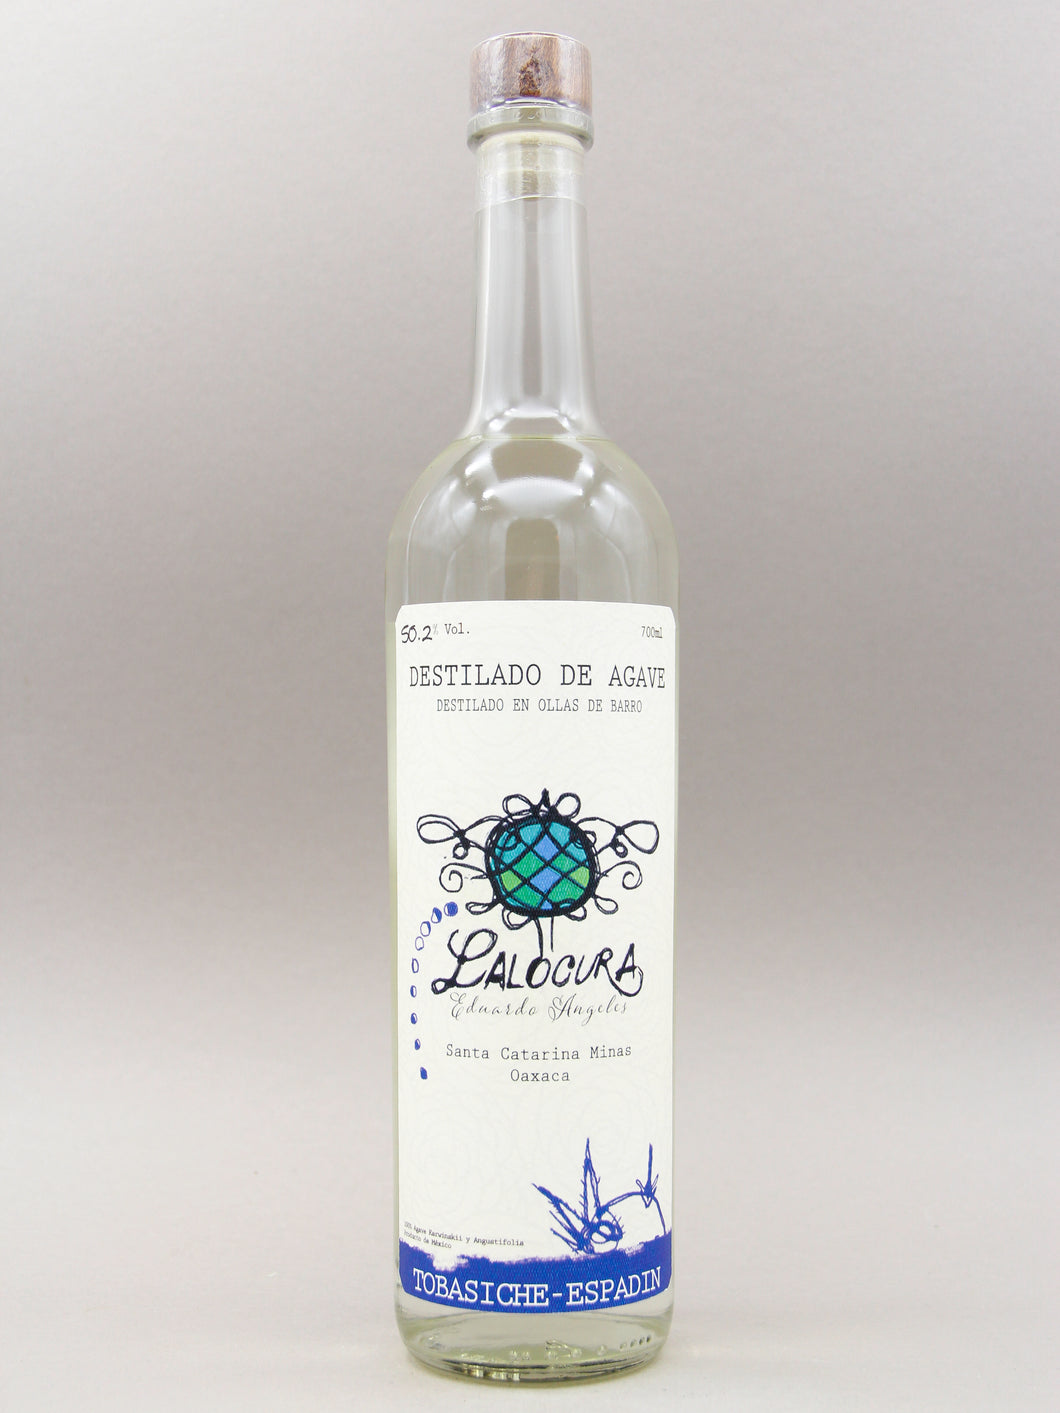 Lalocura, Destilado de agave, Mezcla, Tobasiche-Espadin 2019 (50.2% 70cl)